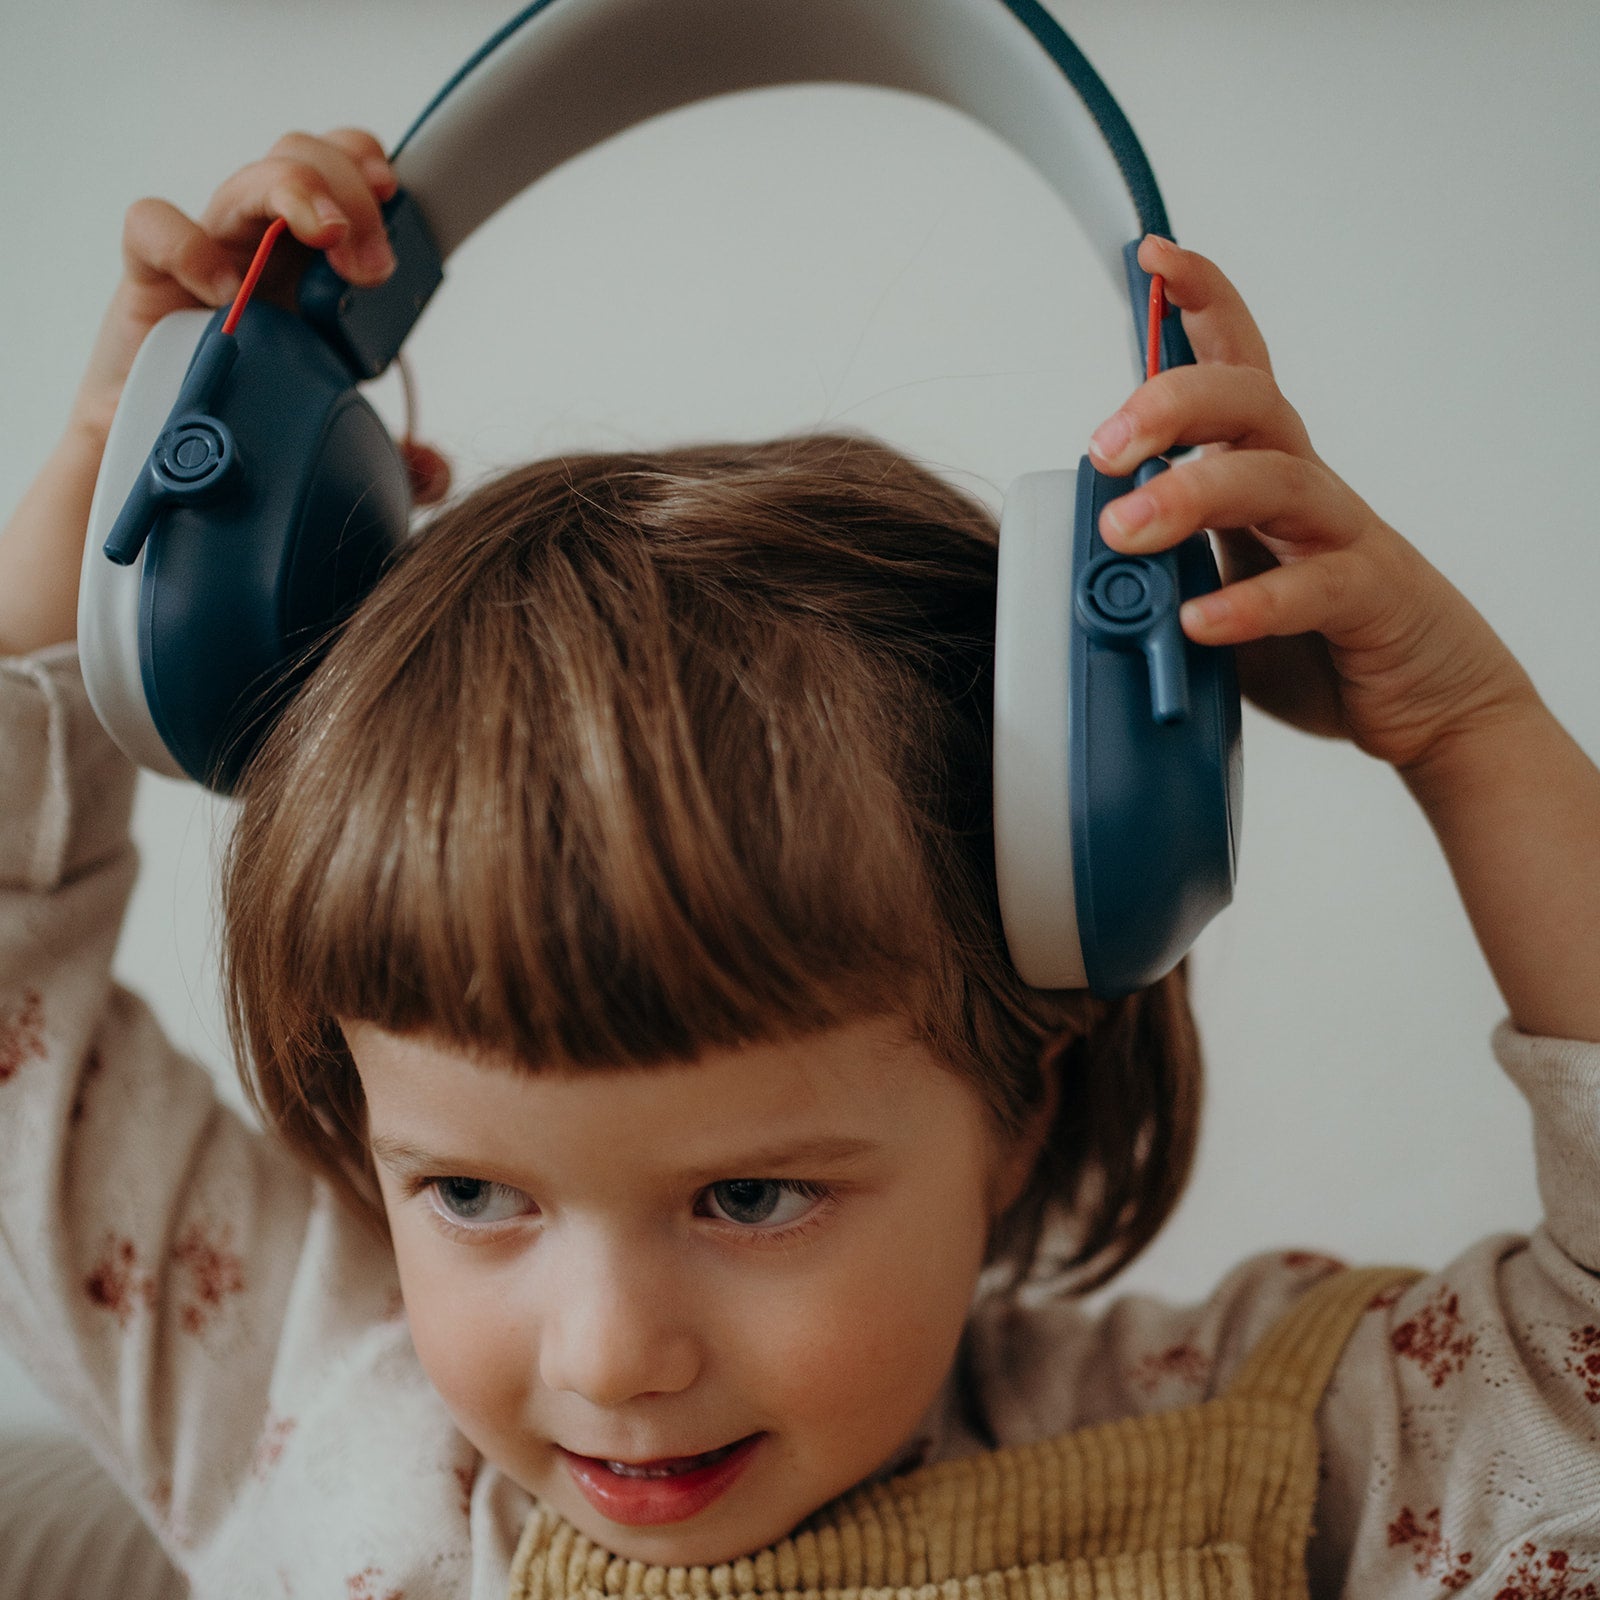 Kidywolf - KIDYNOISE Noise cancling headphones green - Playlaan